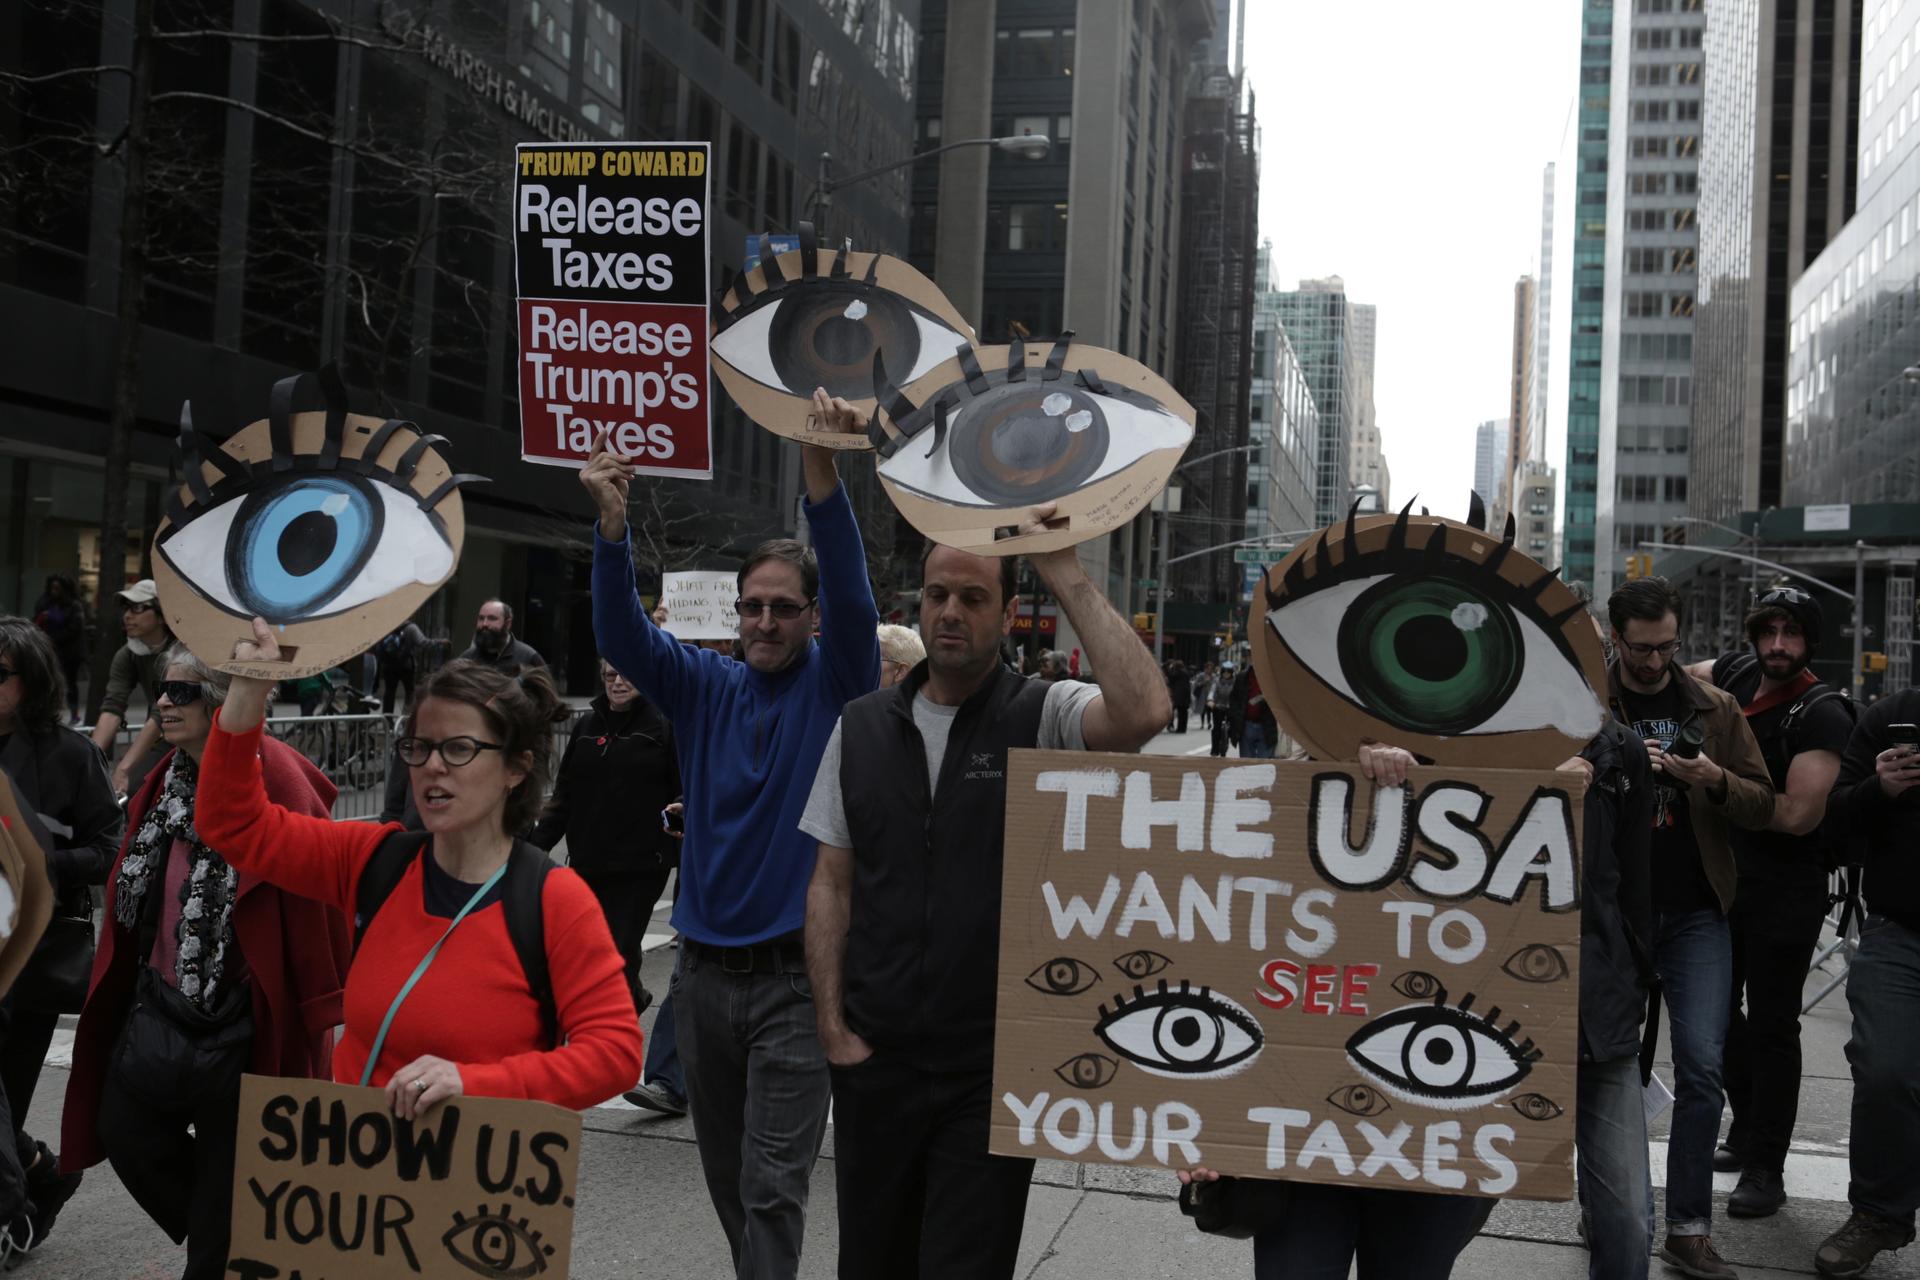 People march demanding U.S. President Donald Trump release his tax returns, in New York, April 15, 2017.